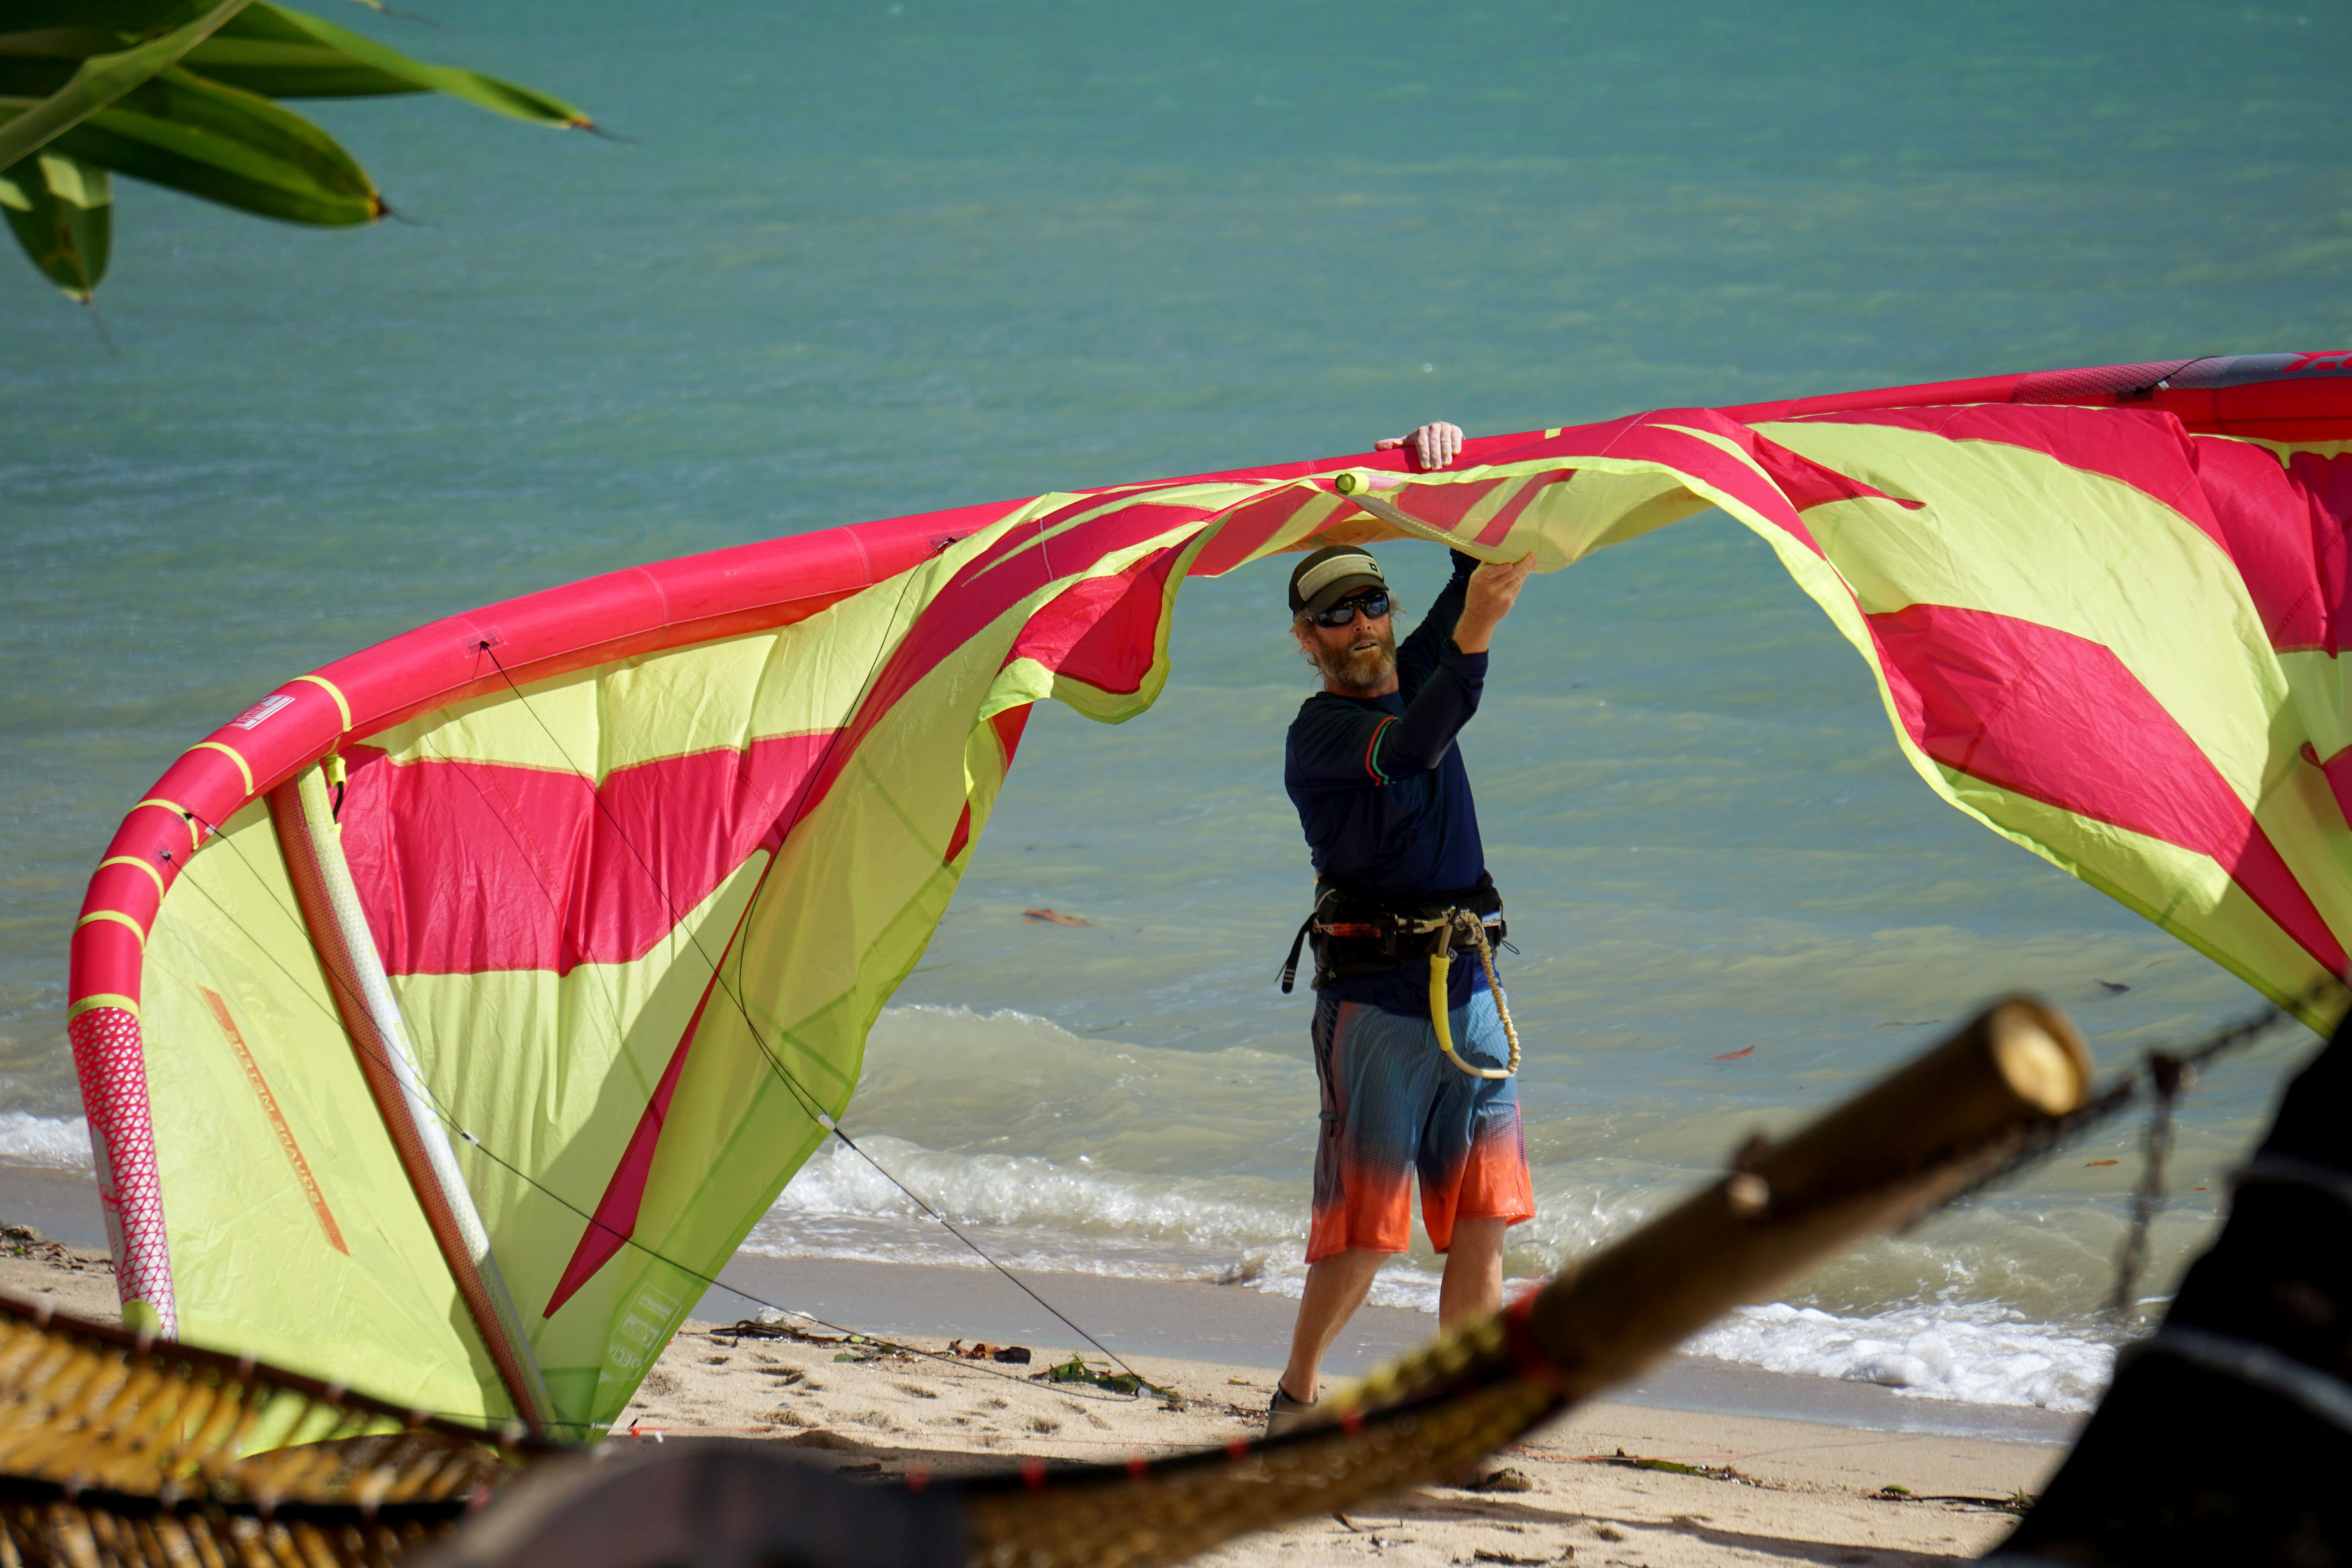 Kite Zone, Friendship Beach (Chalong Bay), Rawai, Phuket